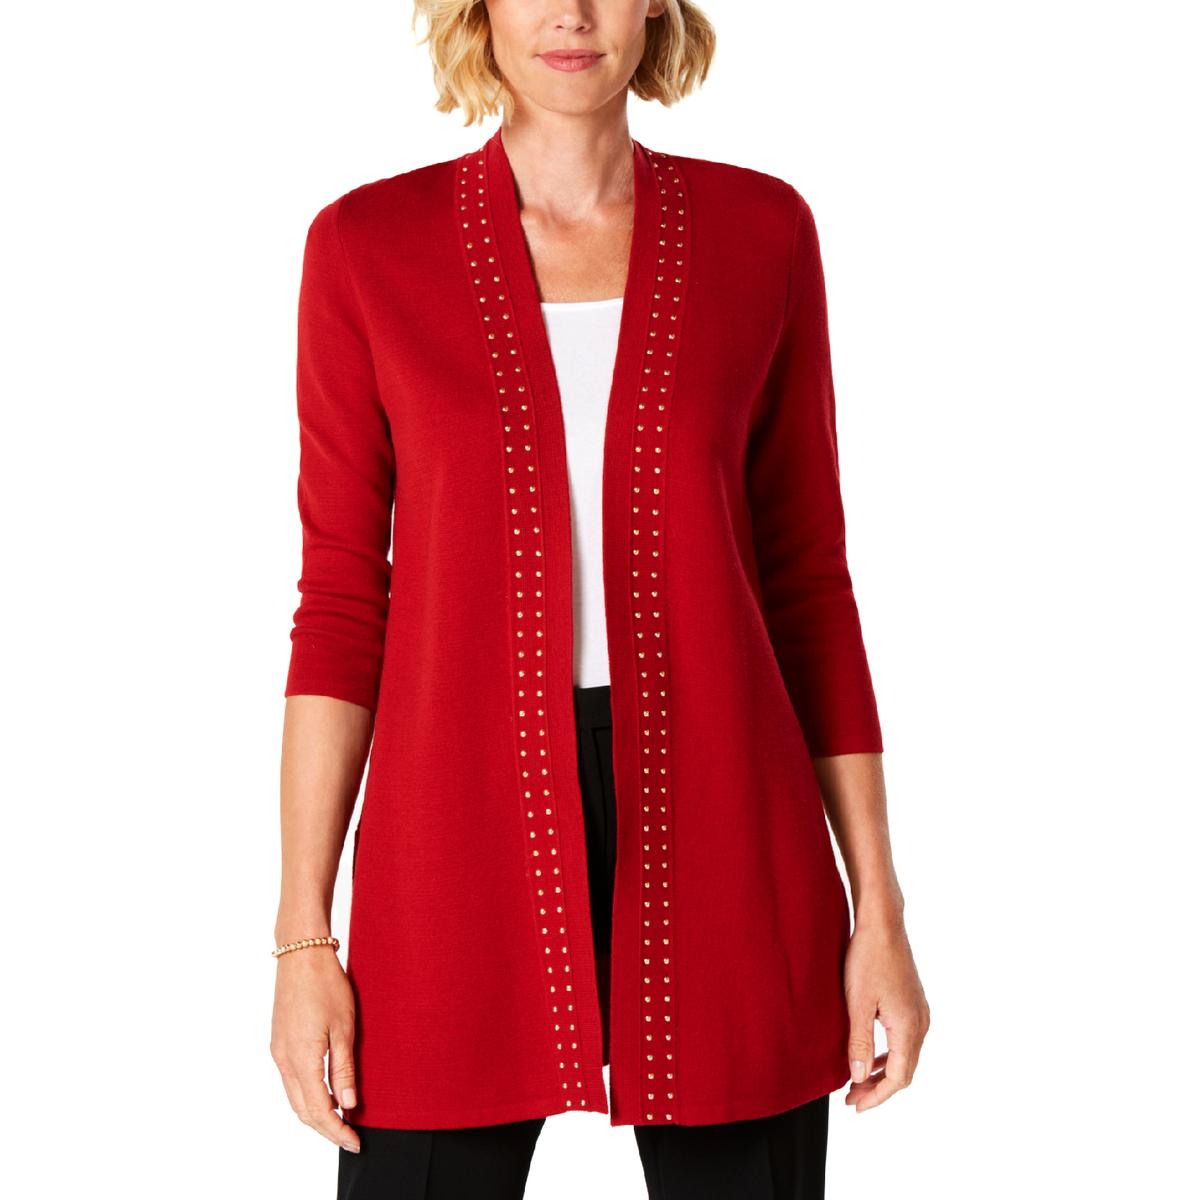 Kasper Womens Red Studded Open Front Cardigan Sweater Jacket S BHFO